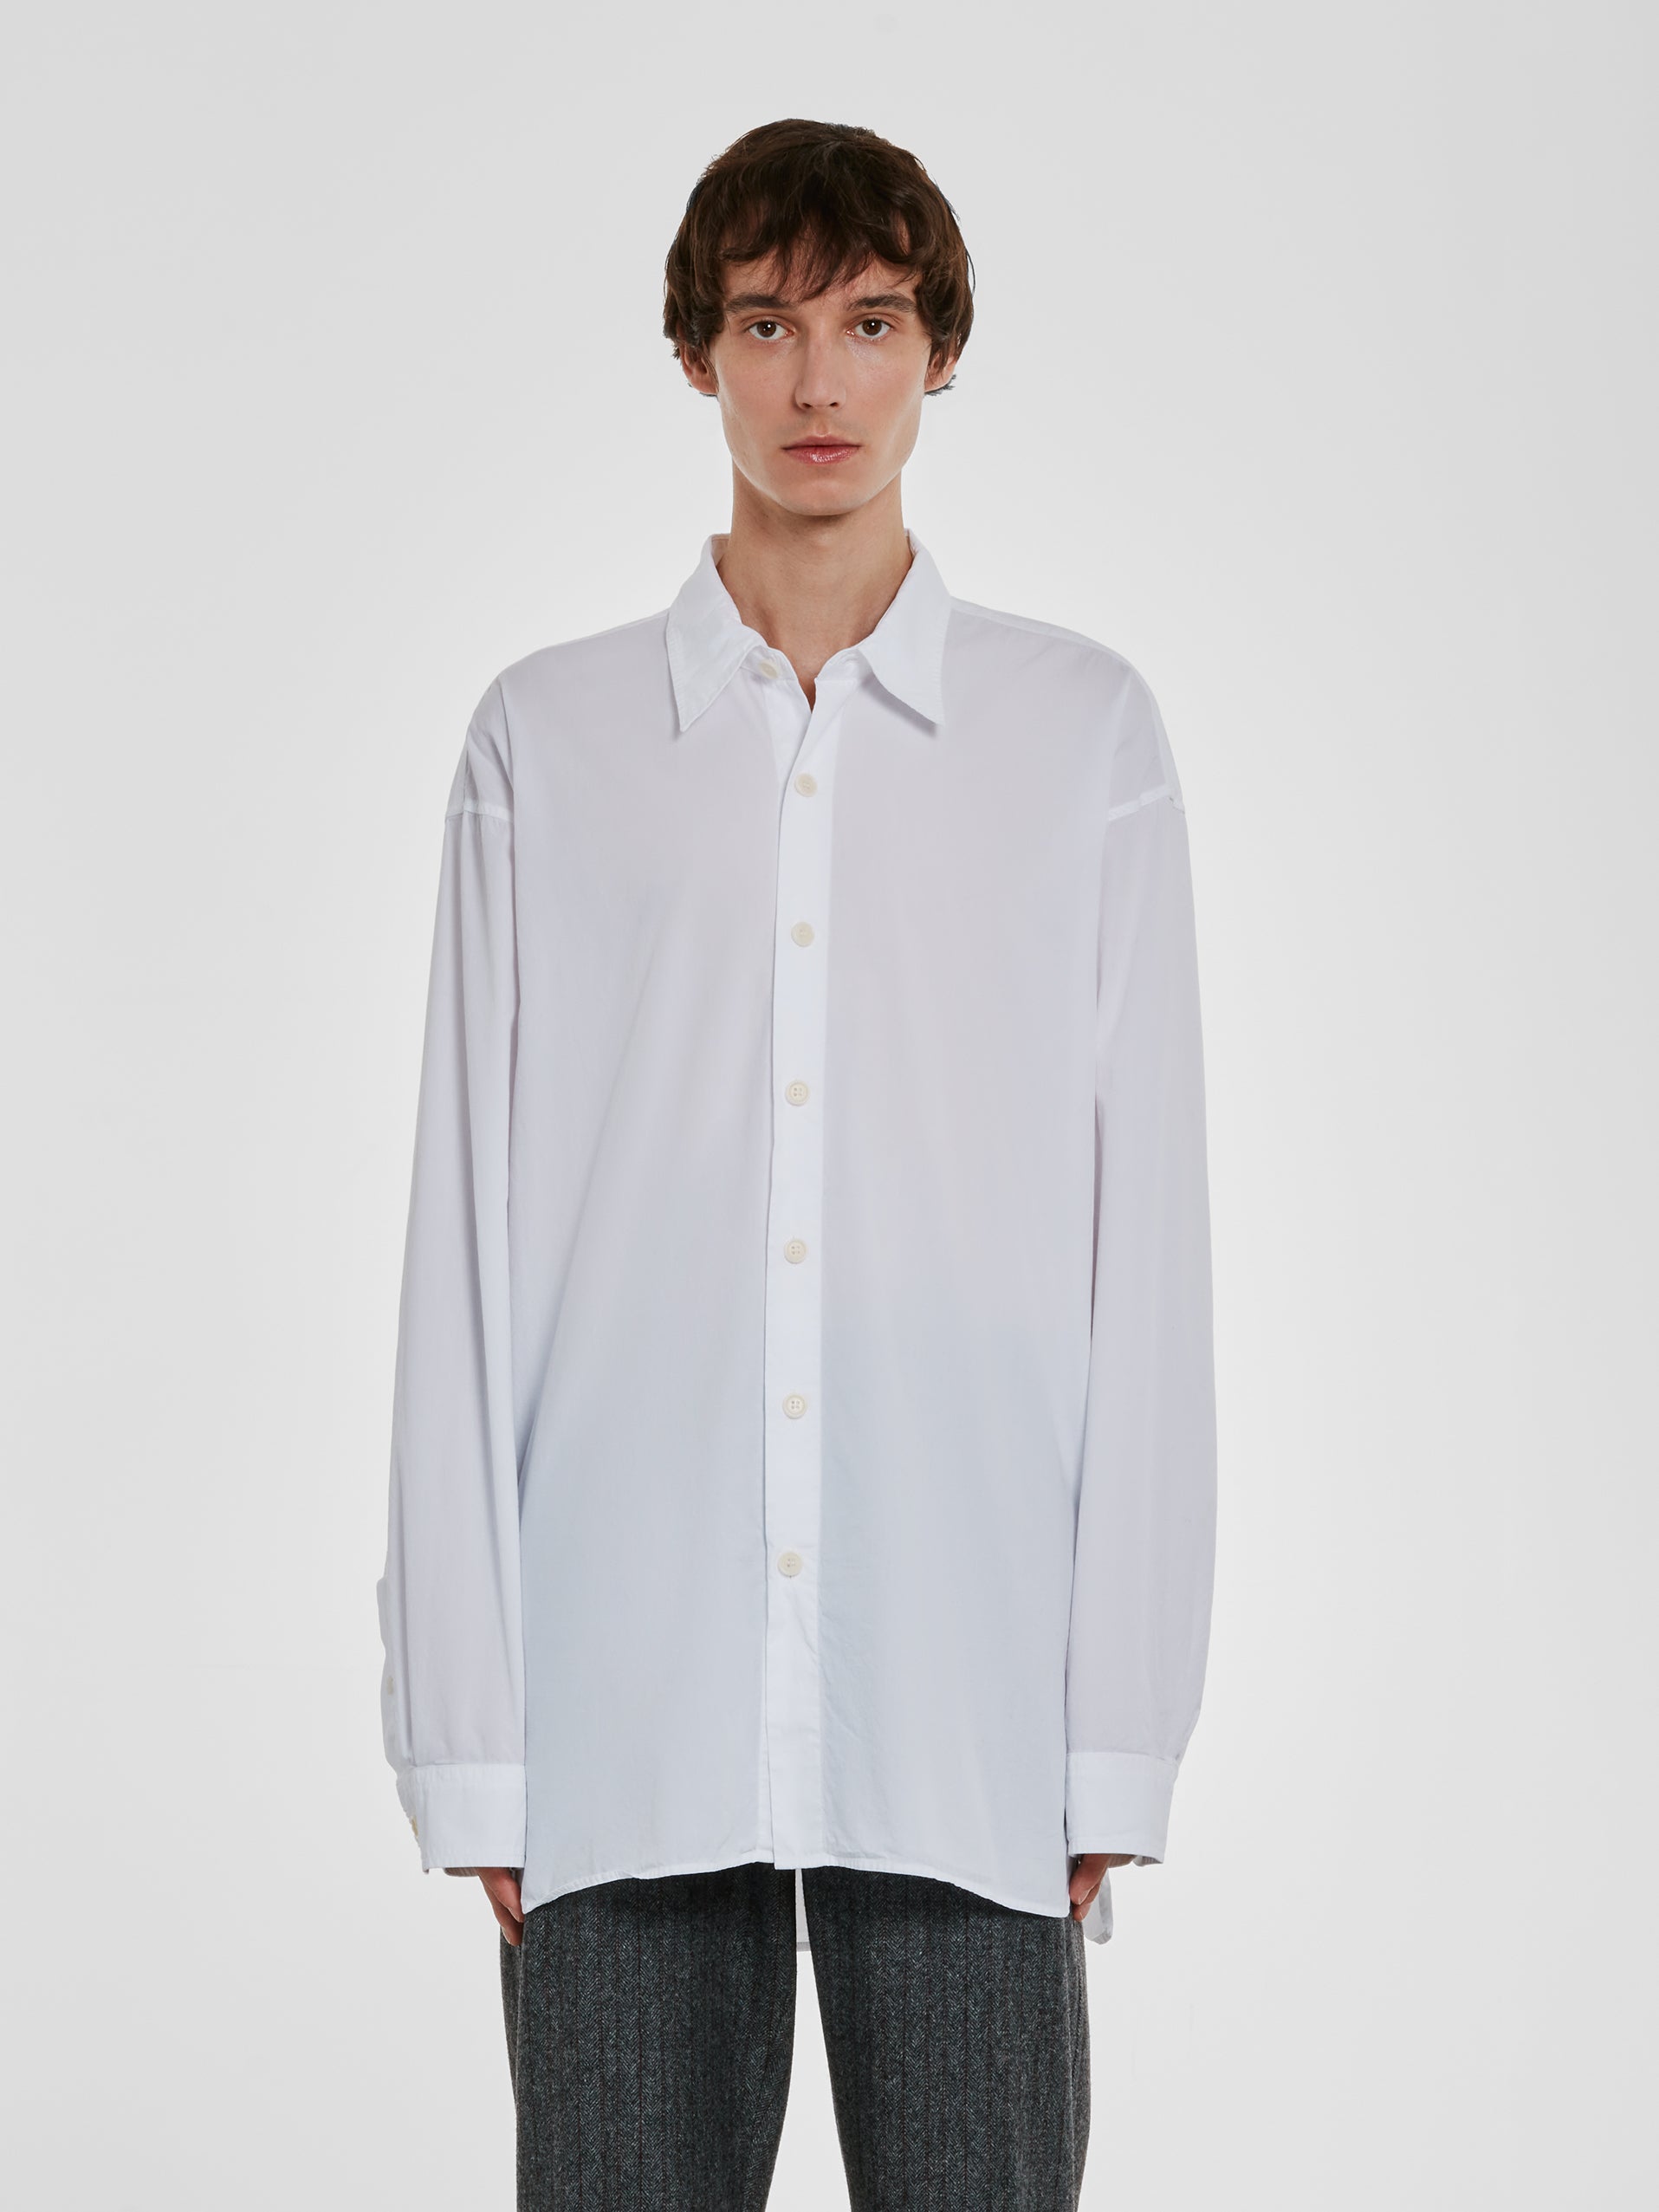 Dries Van Noten - Men’s Boxy Fit Shirt - (White) view 2